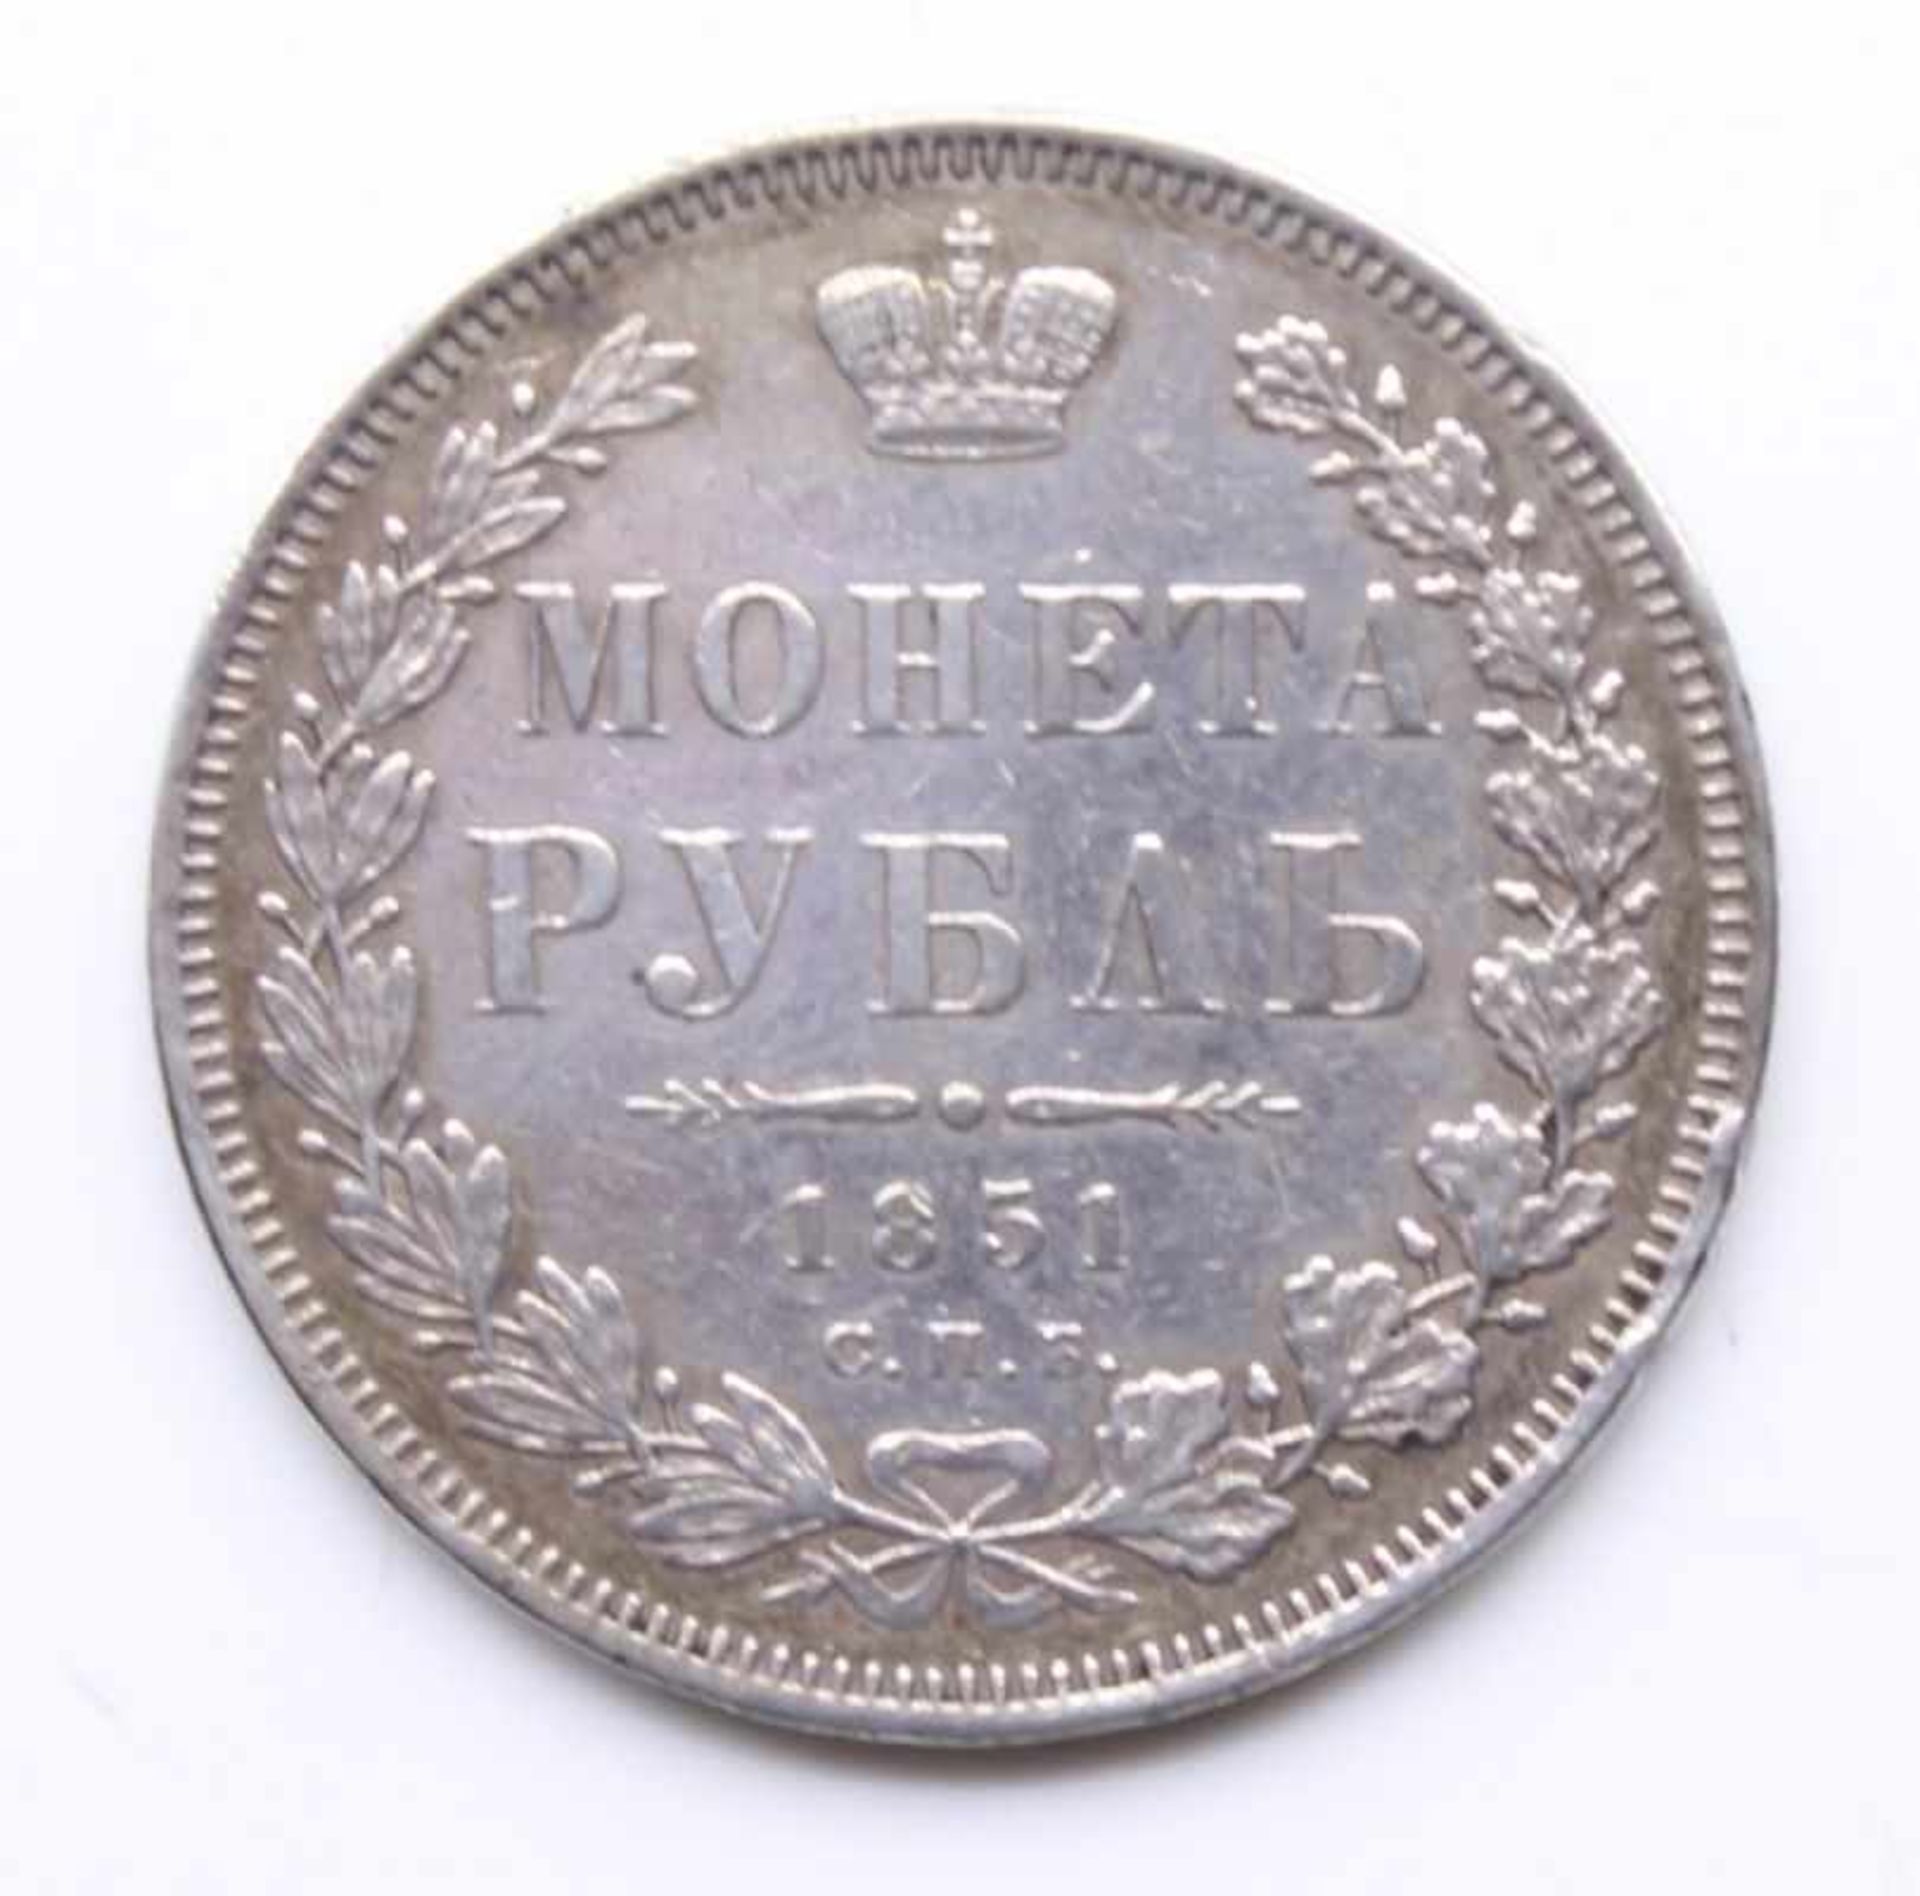 Silbermünze - 1 Rubel Rußland 1851, RS: MOHETA PybAb